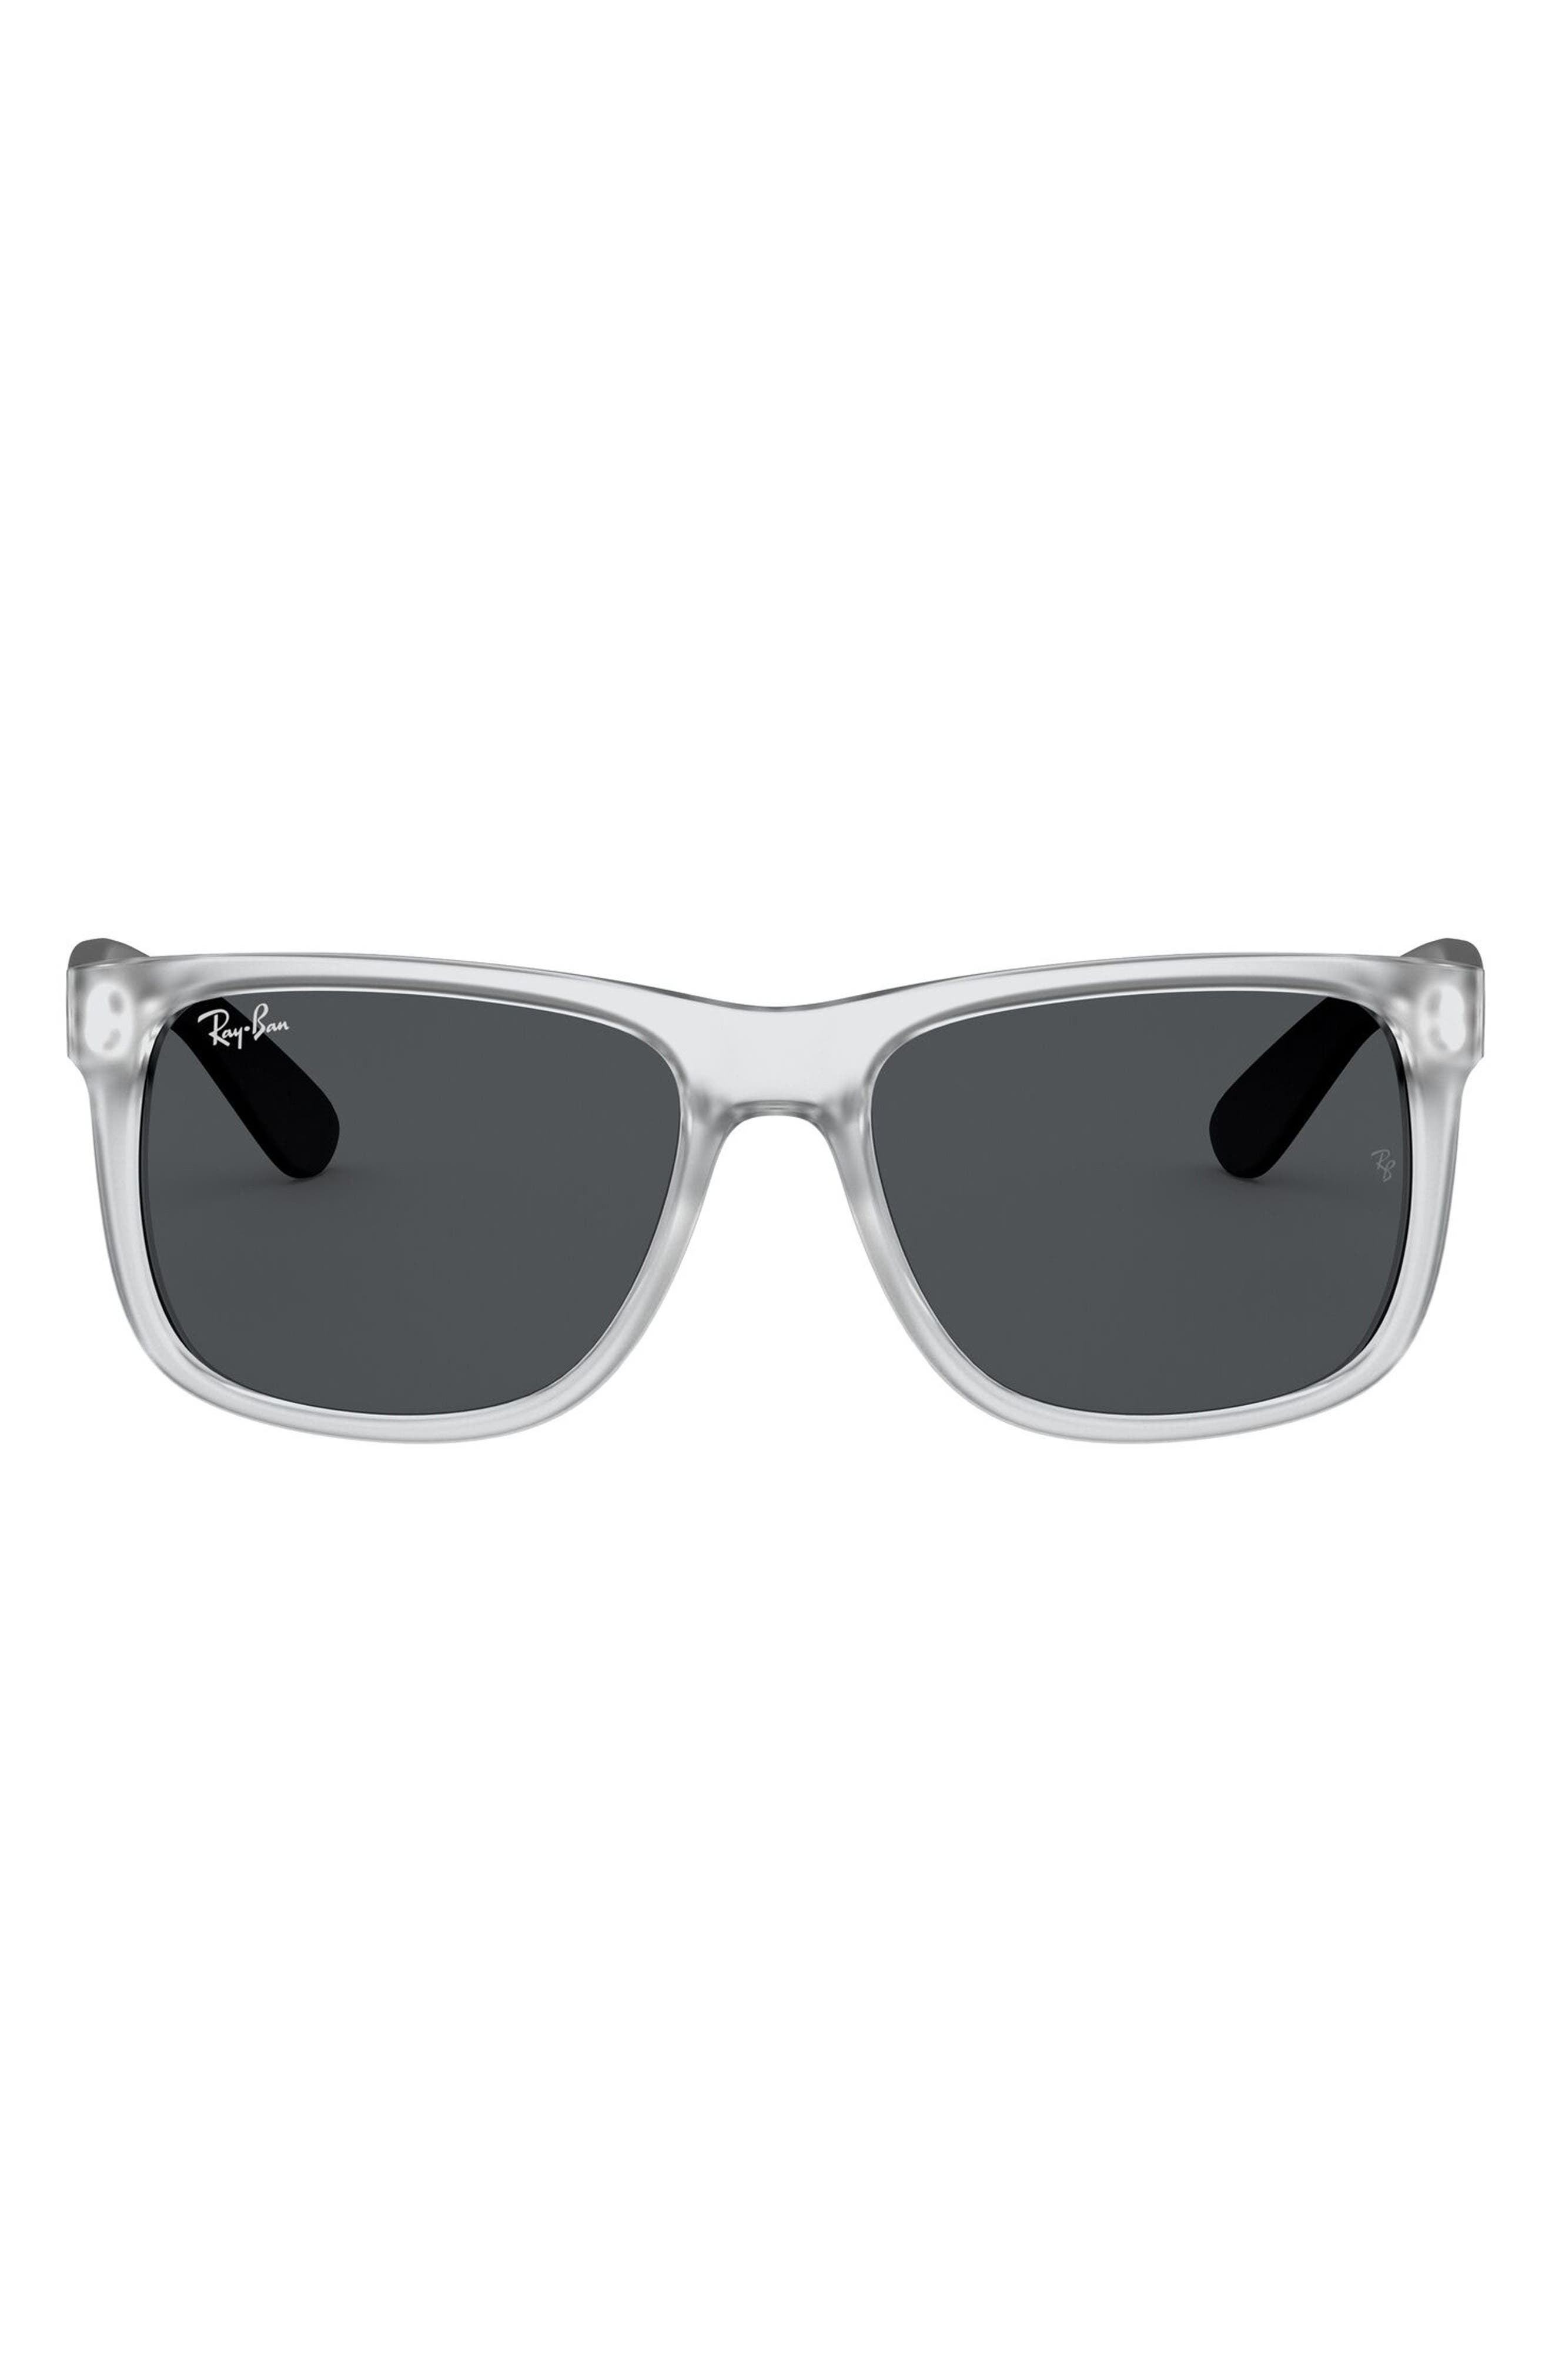 ray ban flat top sunglasses